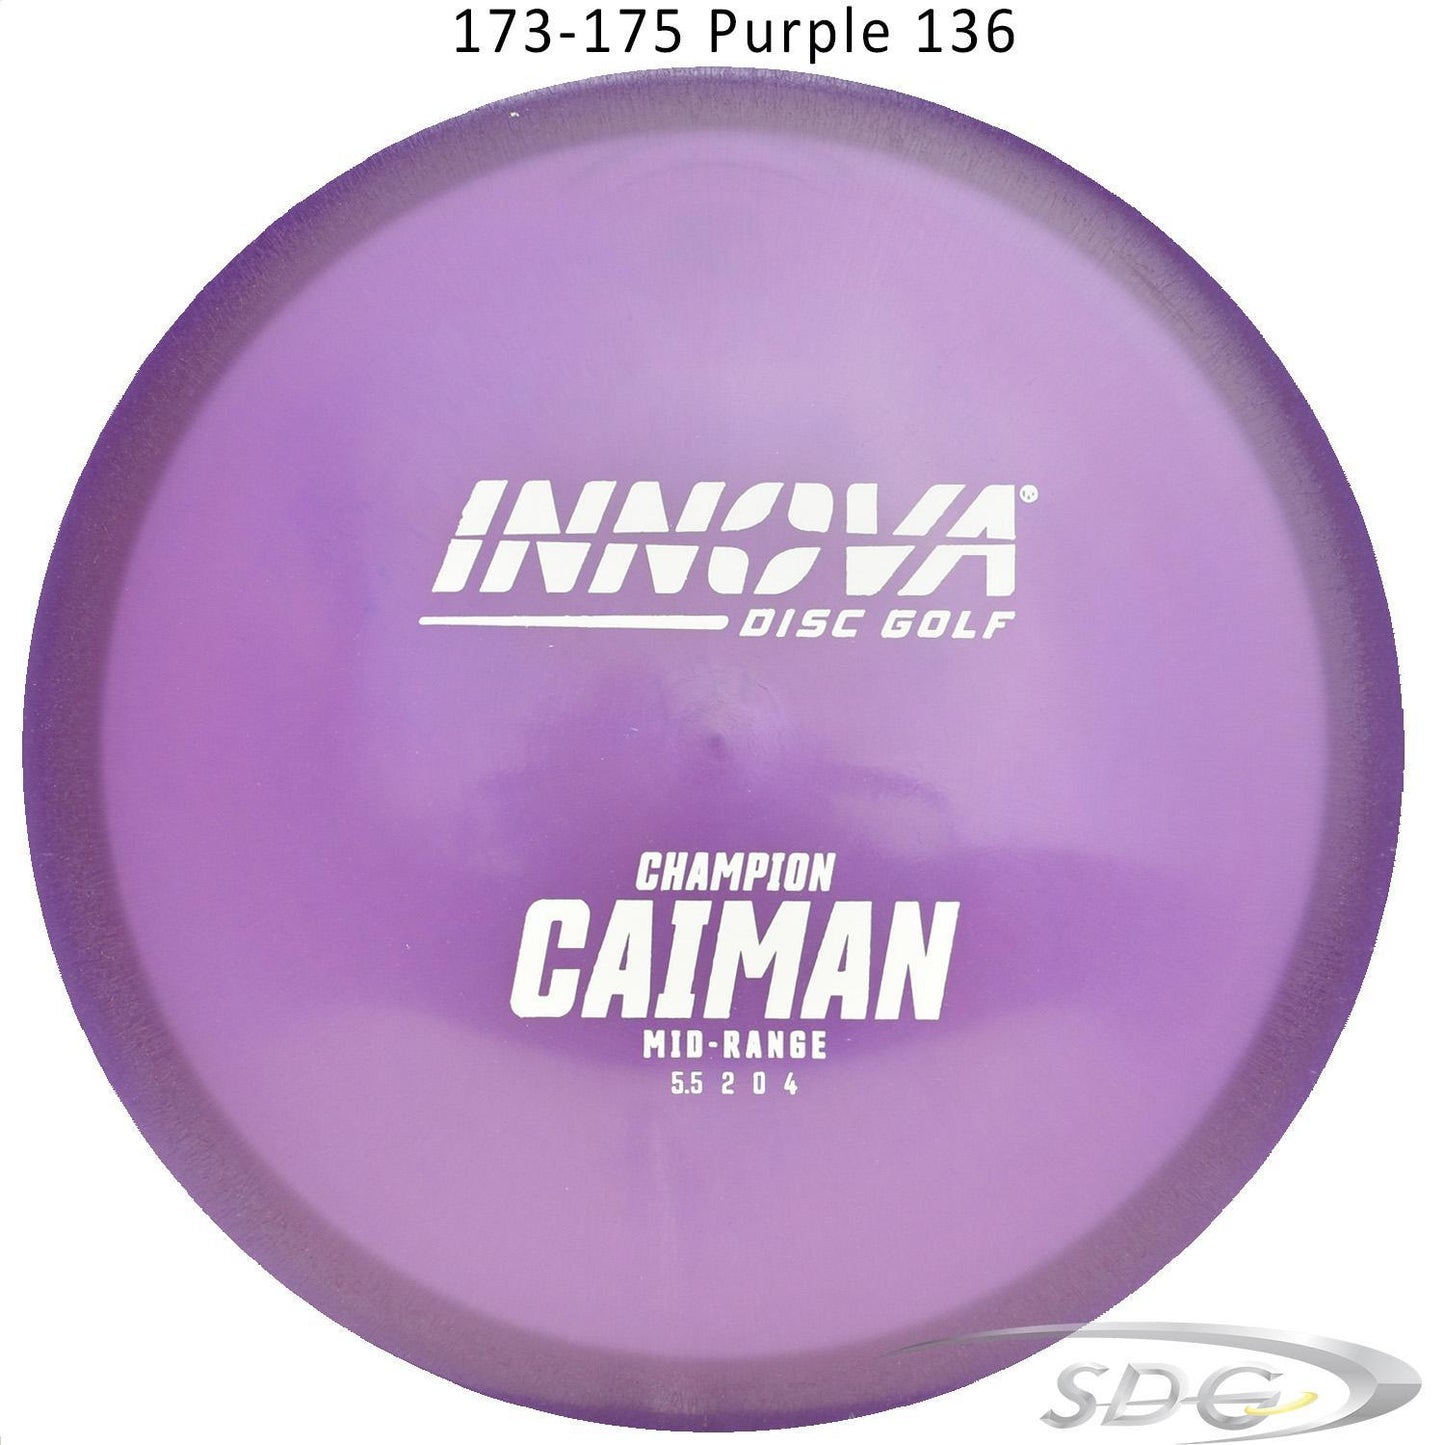 innova-champion-caiman-disc-golf-mid-range 173-175 Purple 136 